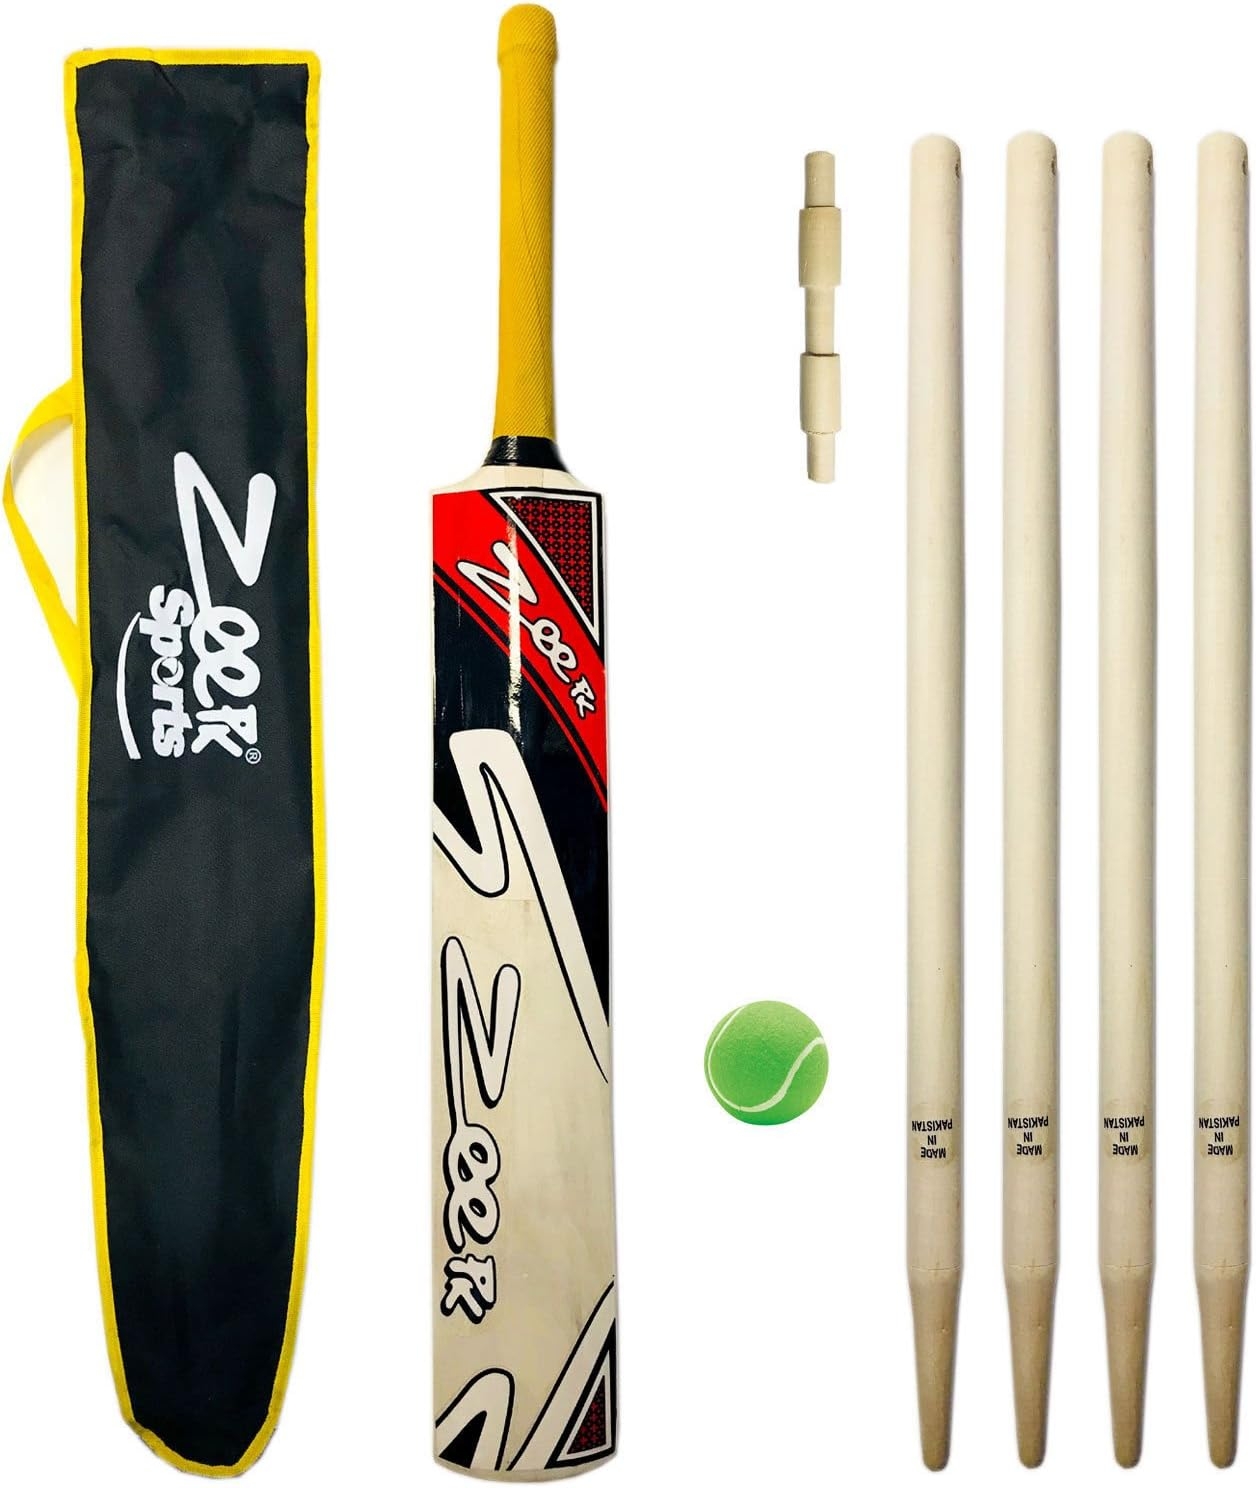 Complete Junior Cricket BAT KIT for Kids Age 8-14 Years Kashmir Willow BAT + WICKETS   price checker   price checker